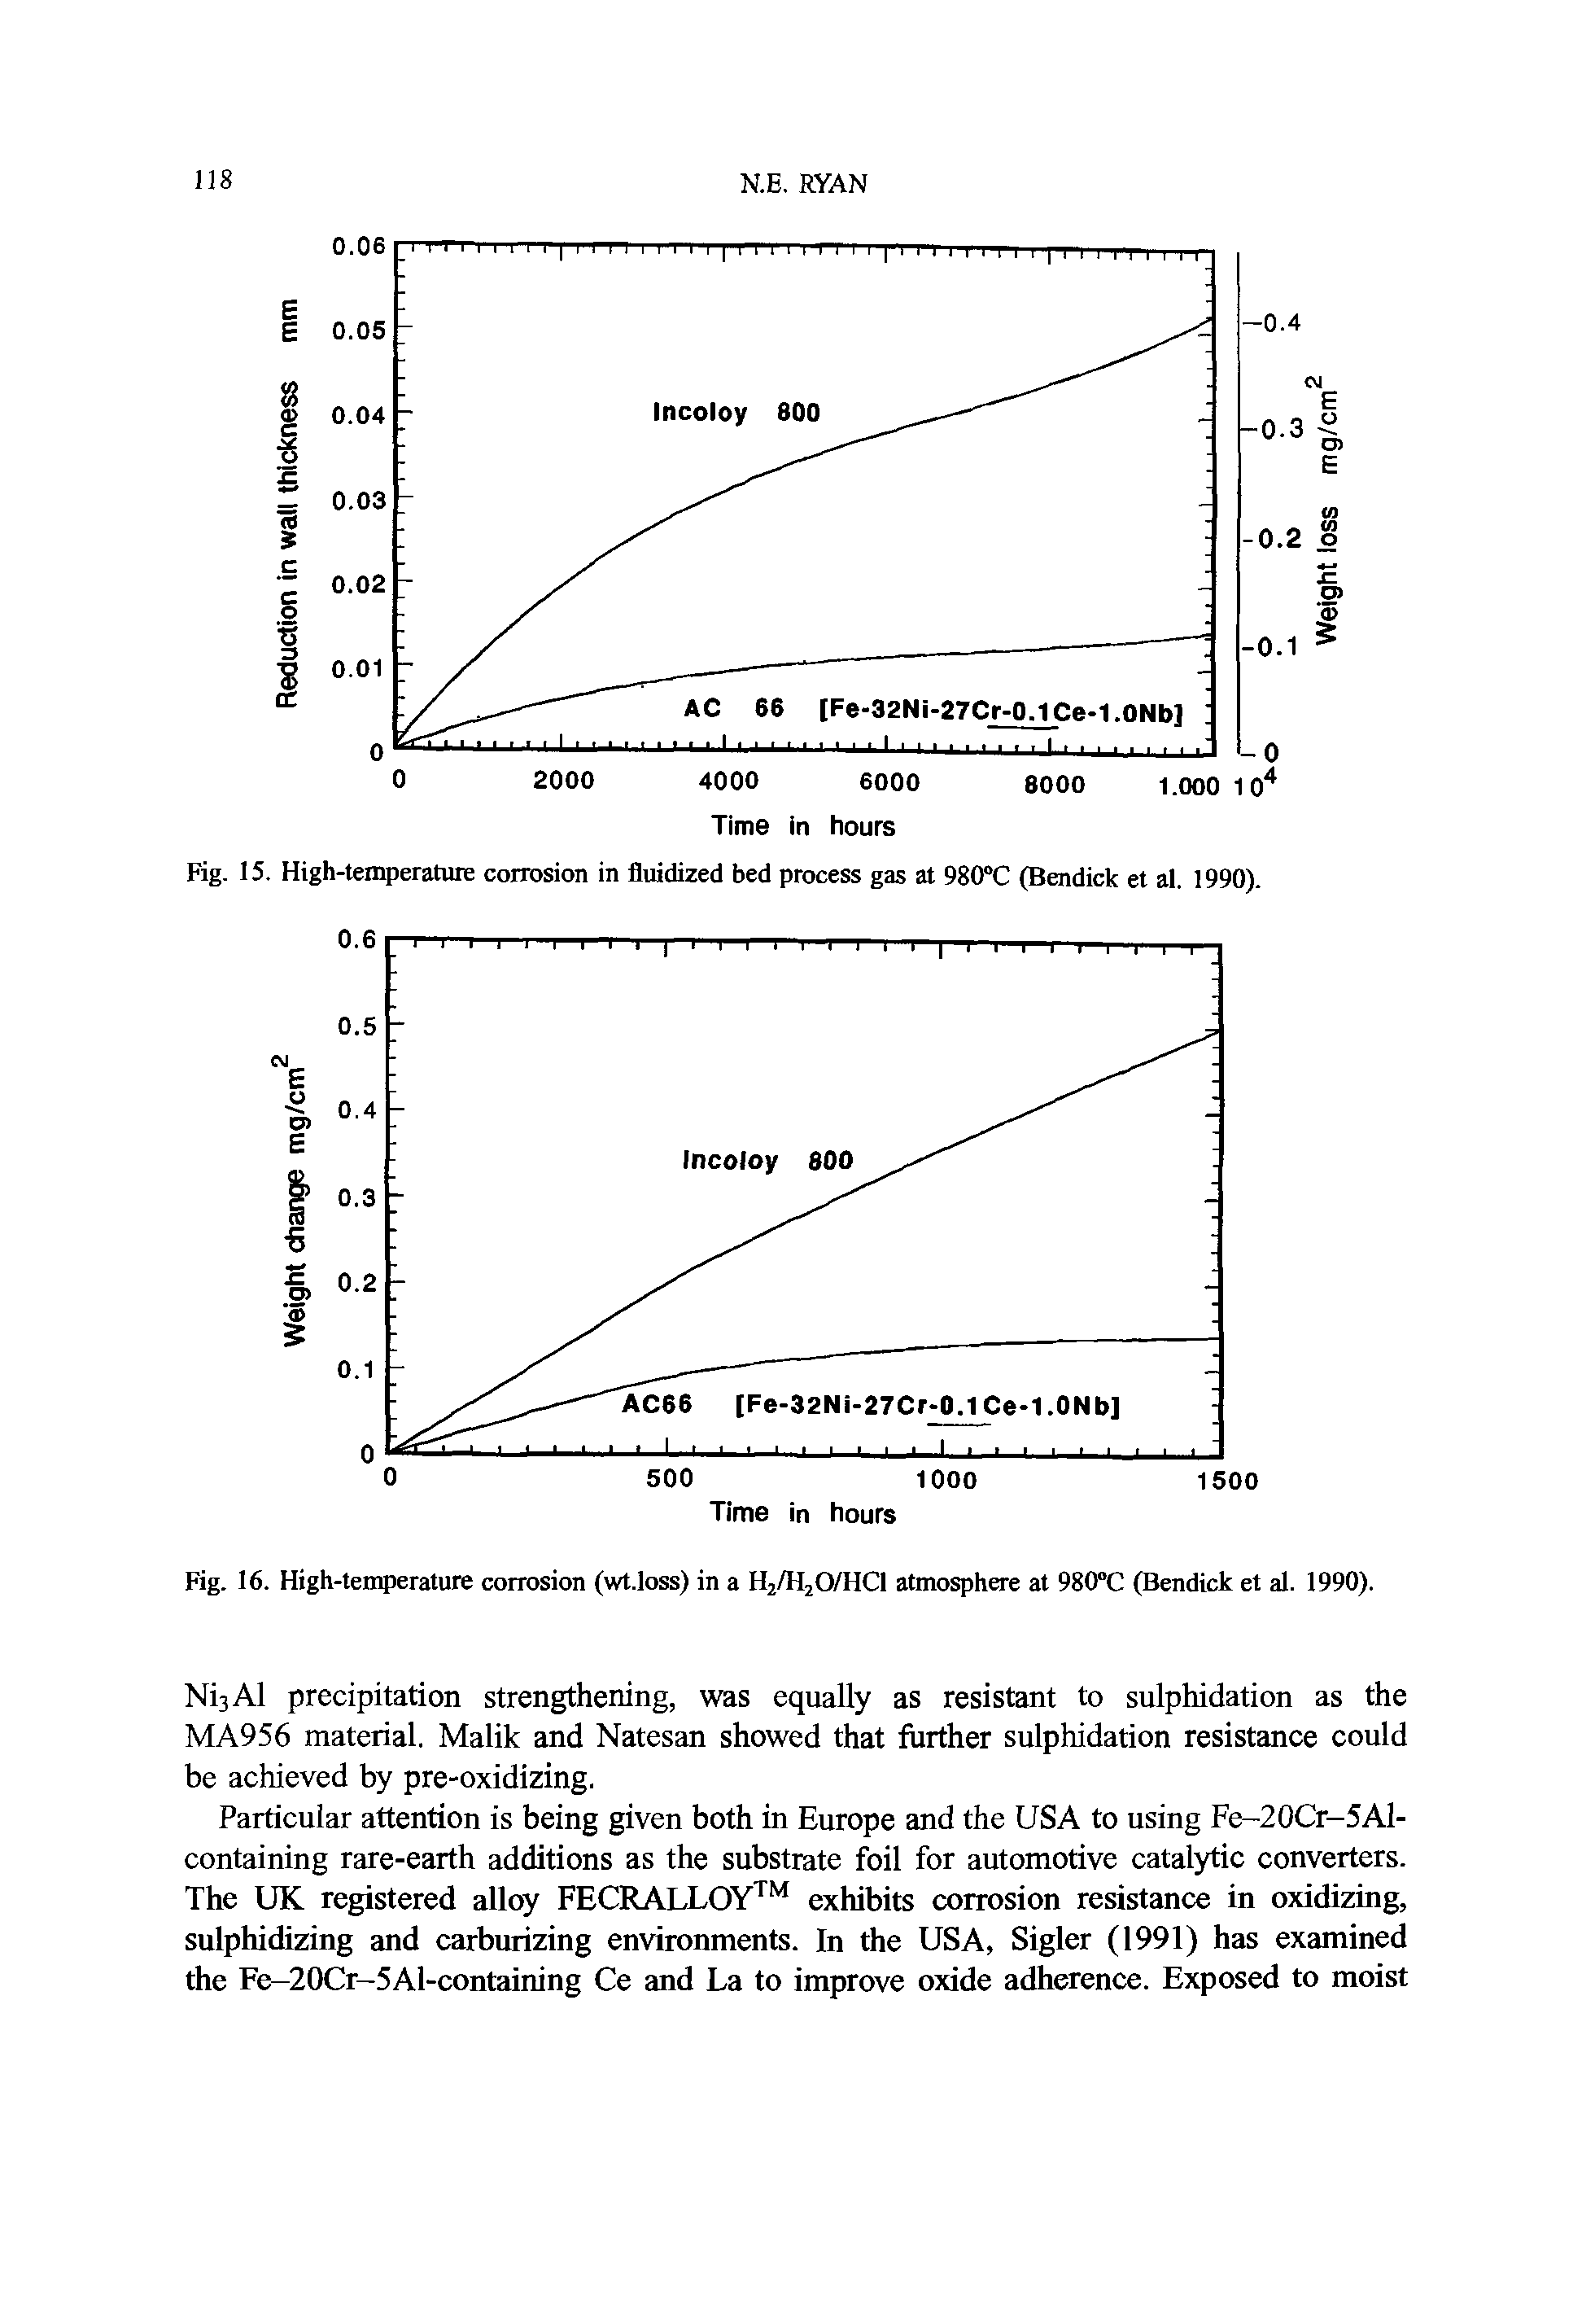 Fig. 16. High-temperature corrosion (wt.loss) in a Hi/HjO/HCl atmosphere at 980°C (Bendick et al. 1990).